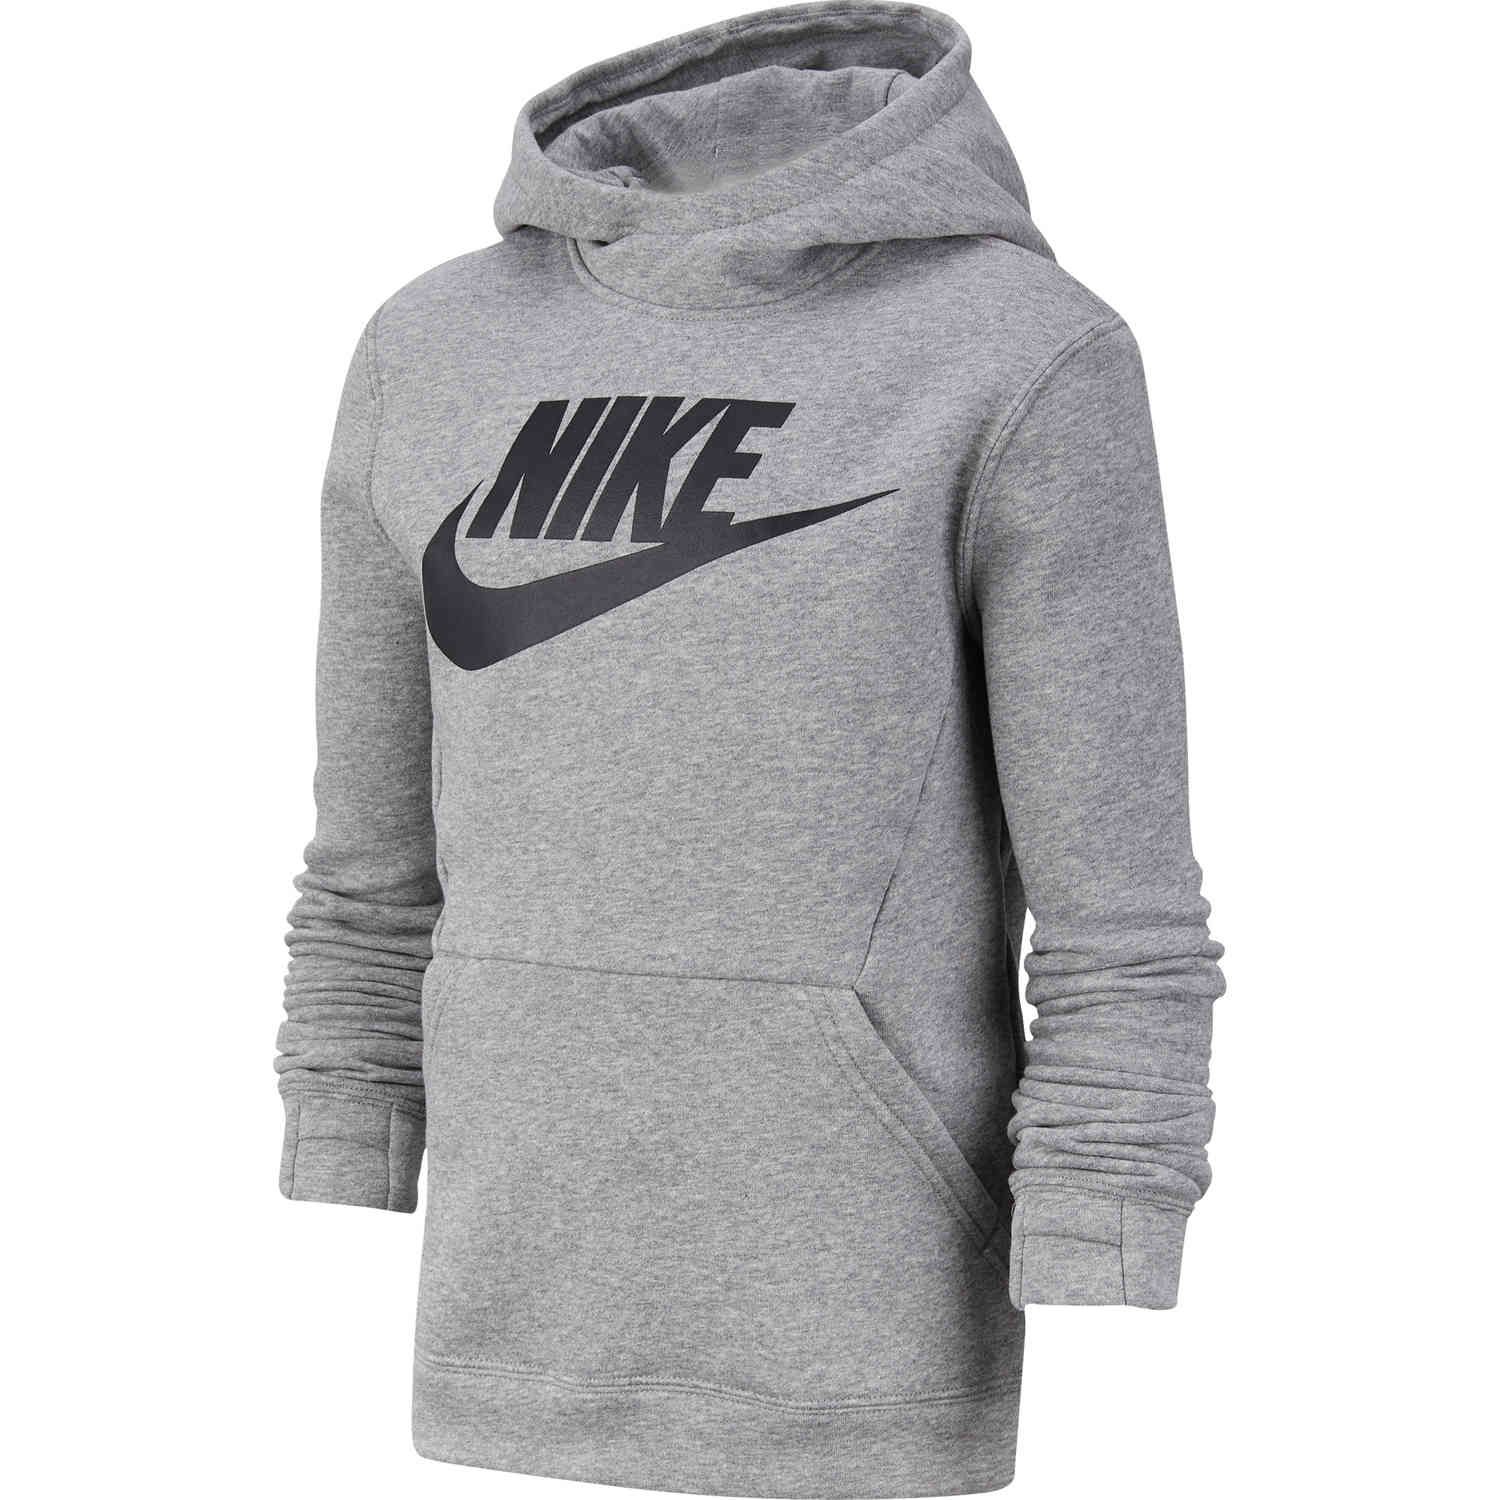 Kids Nike Sportswear Pullover Fleece Hoodie Dark Grey Heather/Black - Soccer Master